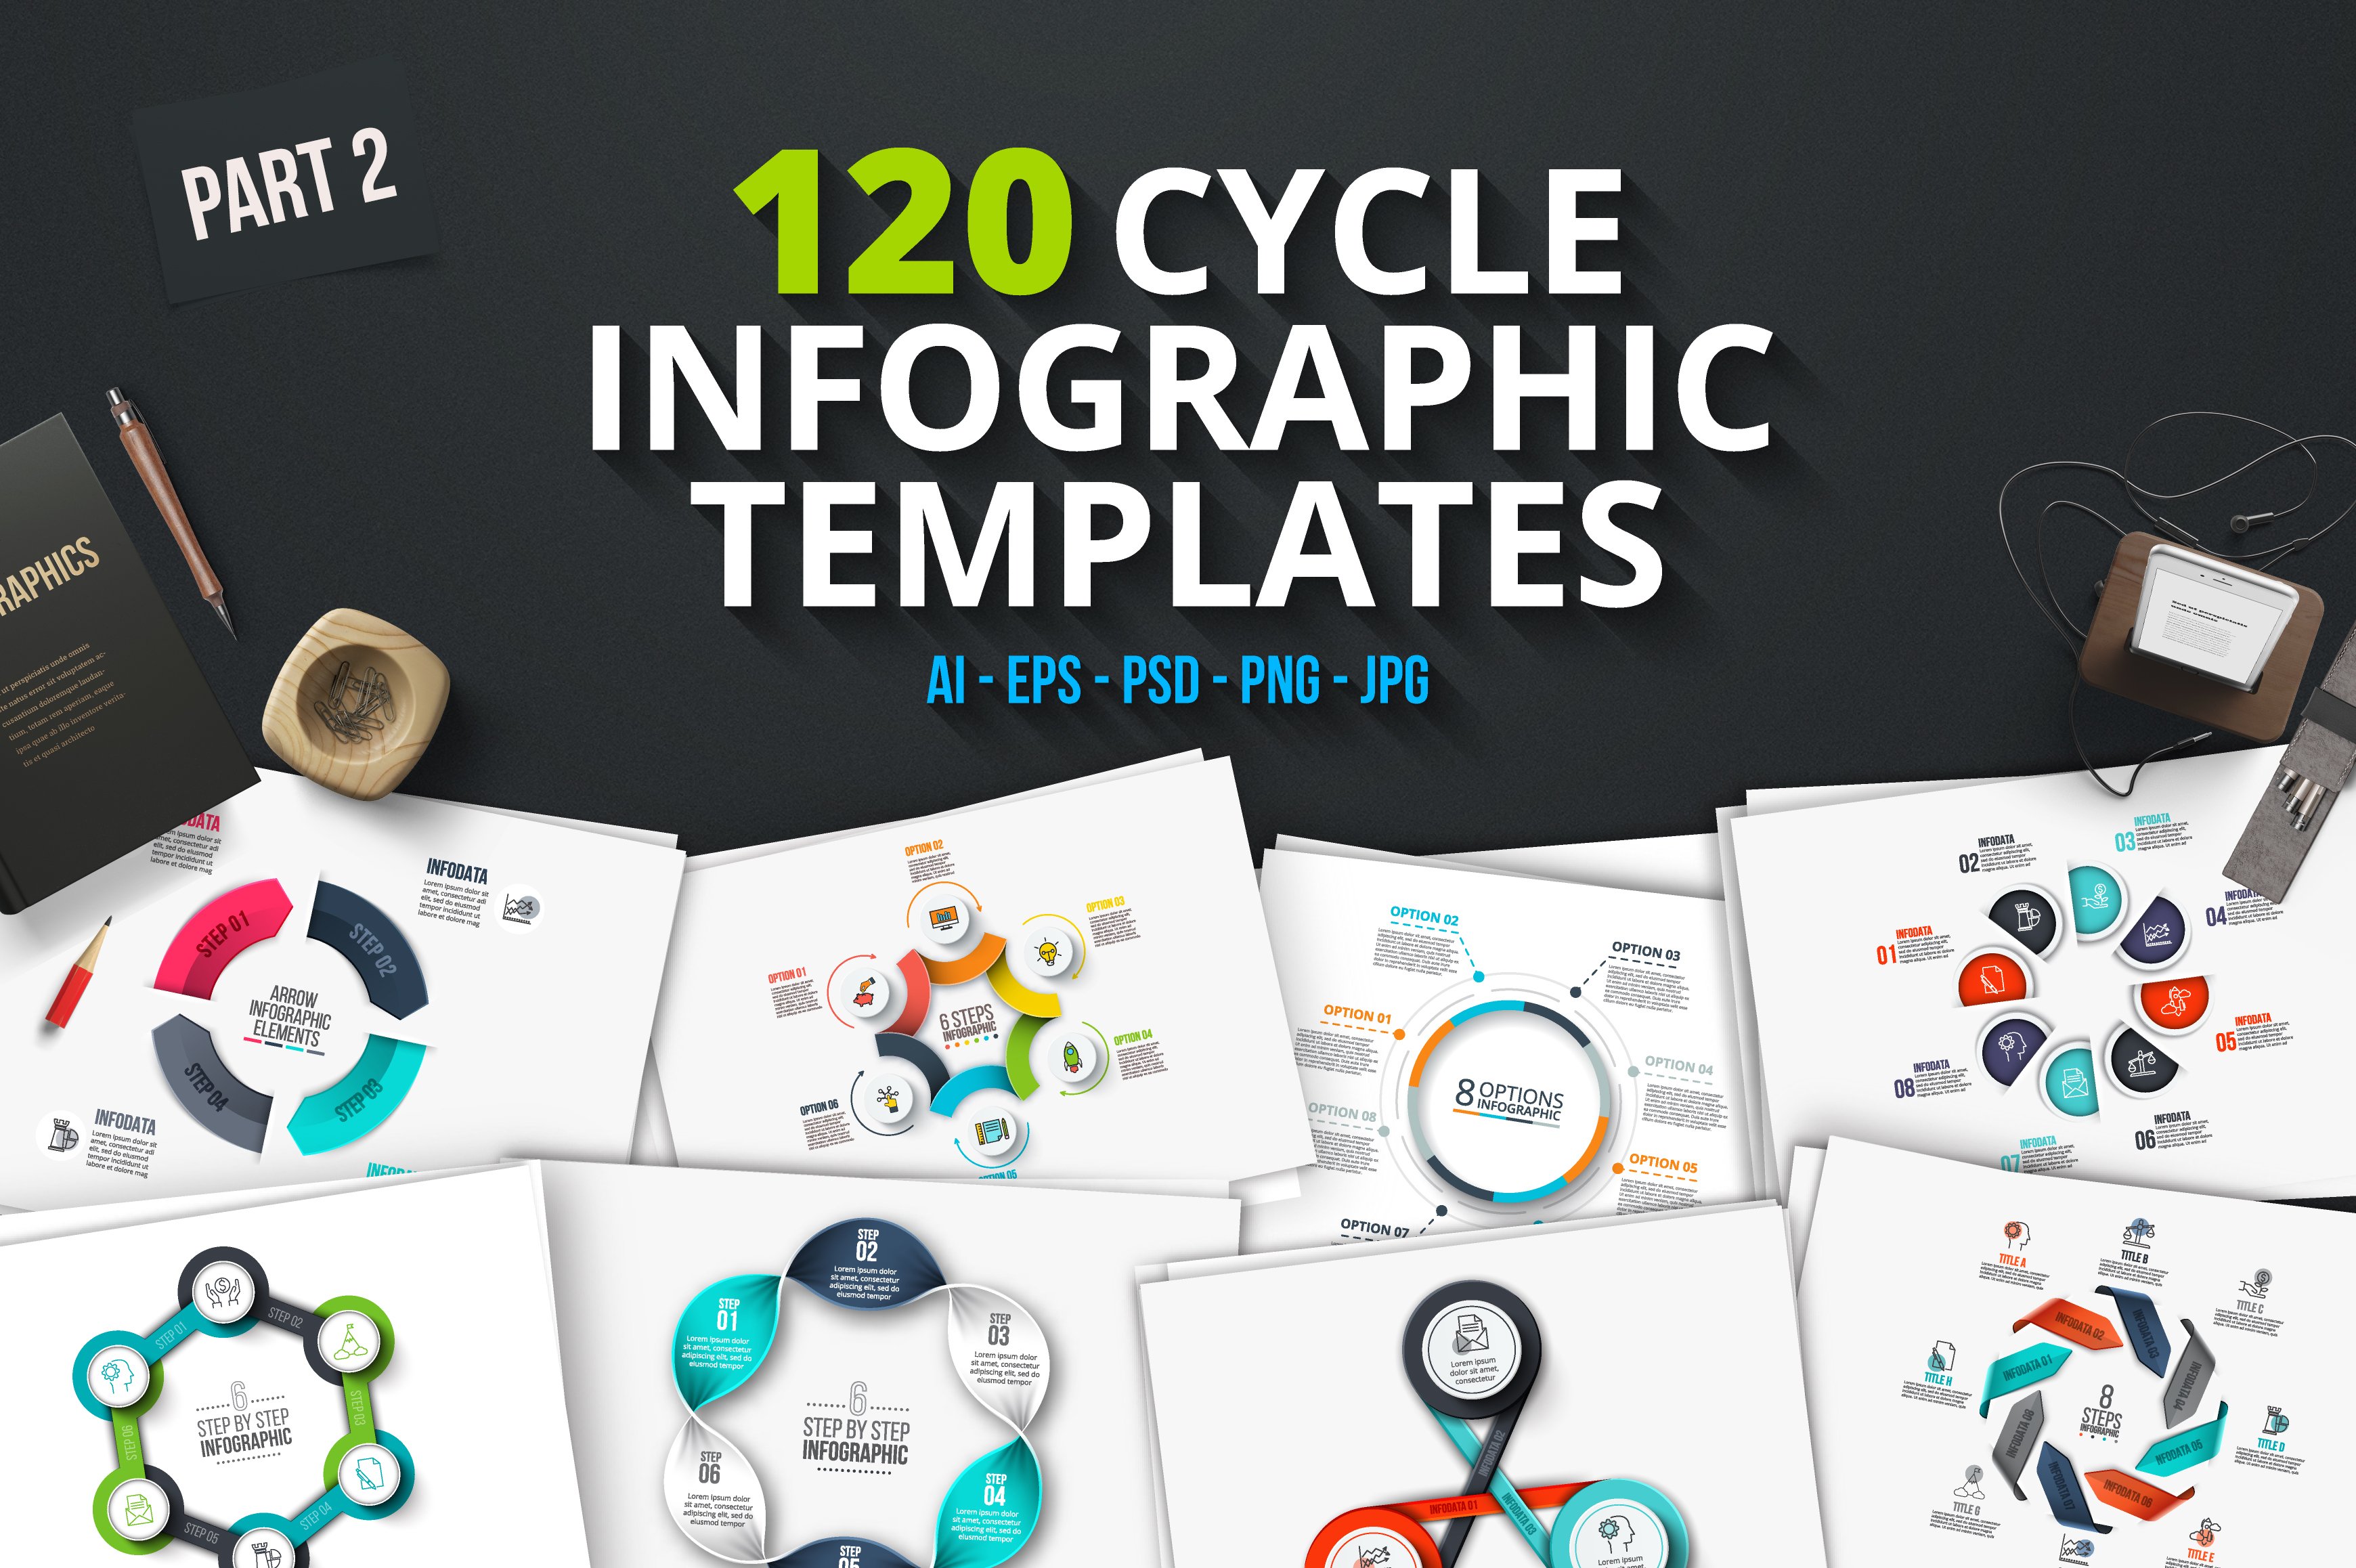 环形信息图形模板 120 cycle infographic